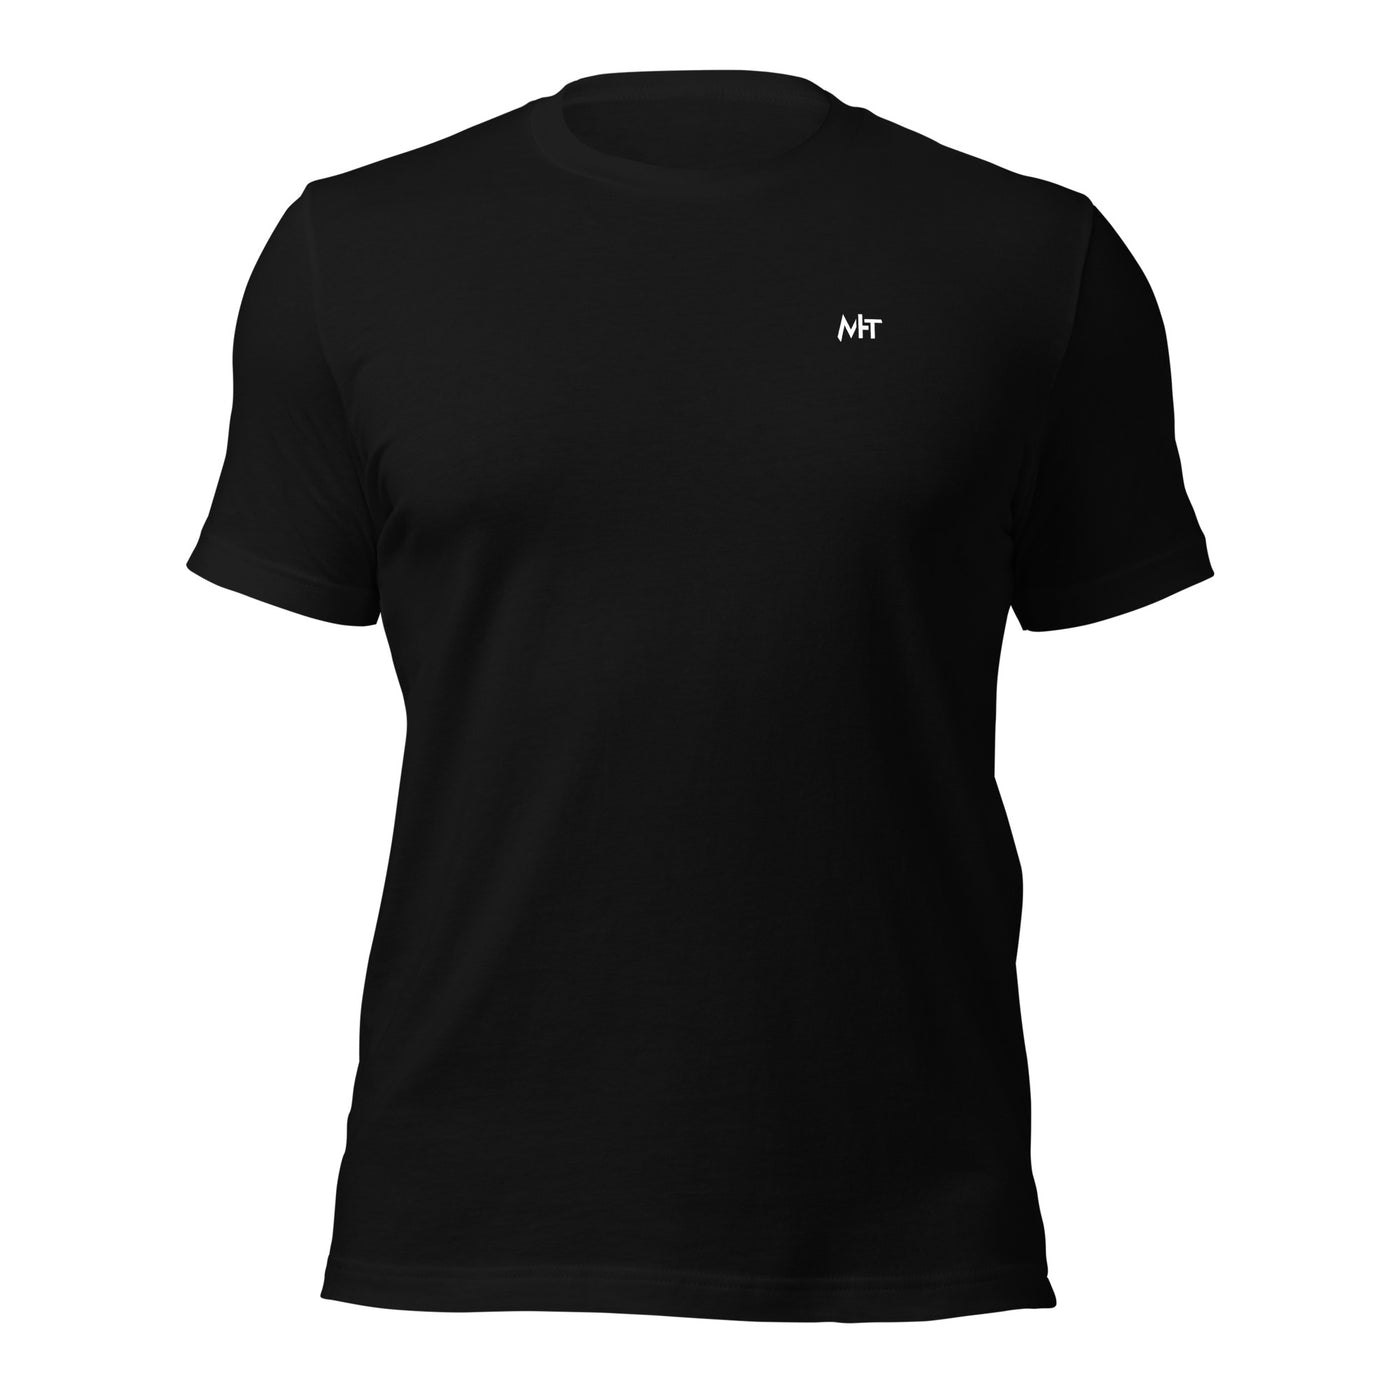 Sarcasm Mode On - Unisex t-shirt (back print)